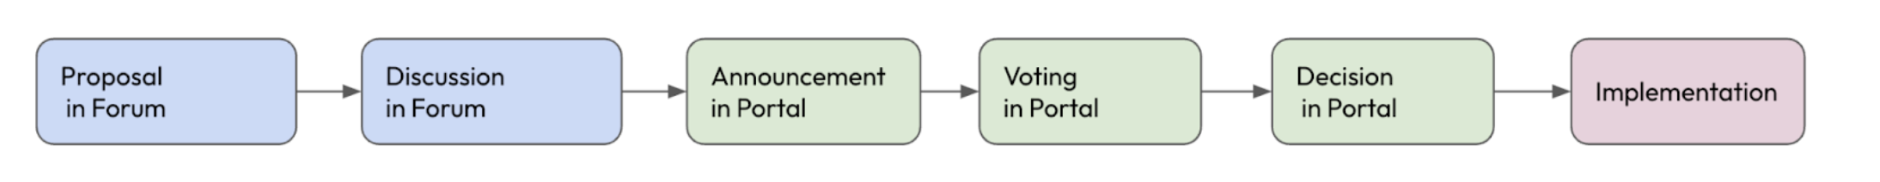 voting process diagram